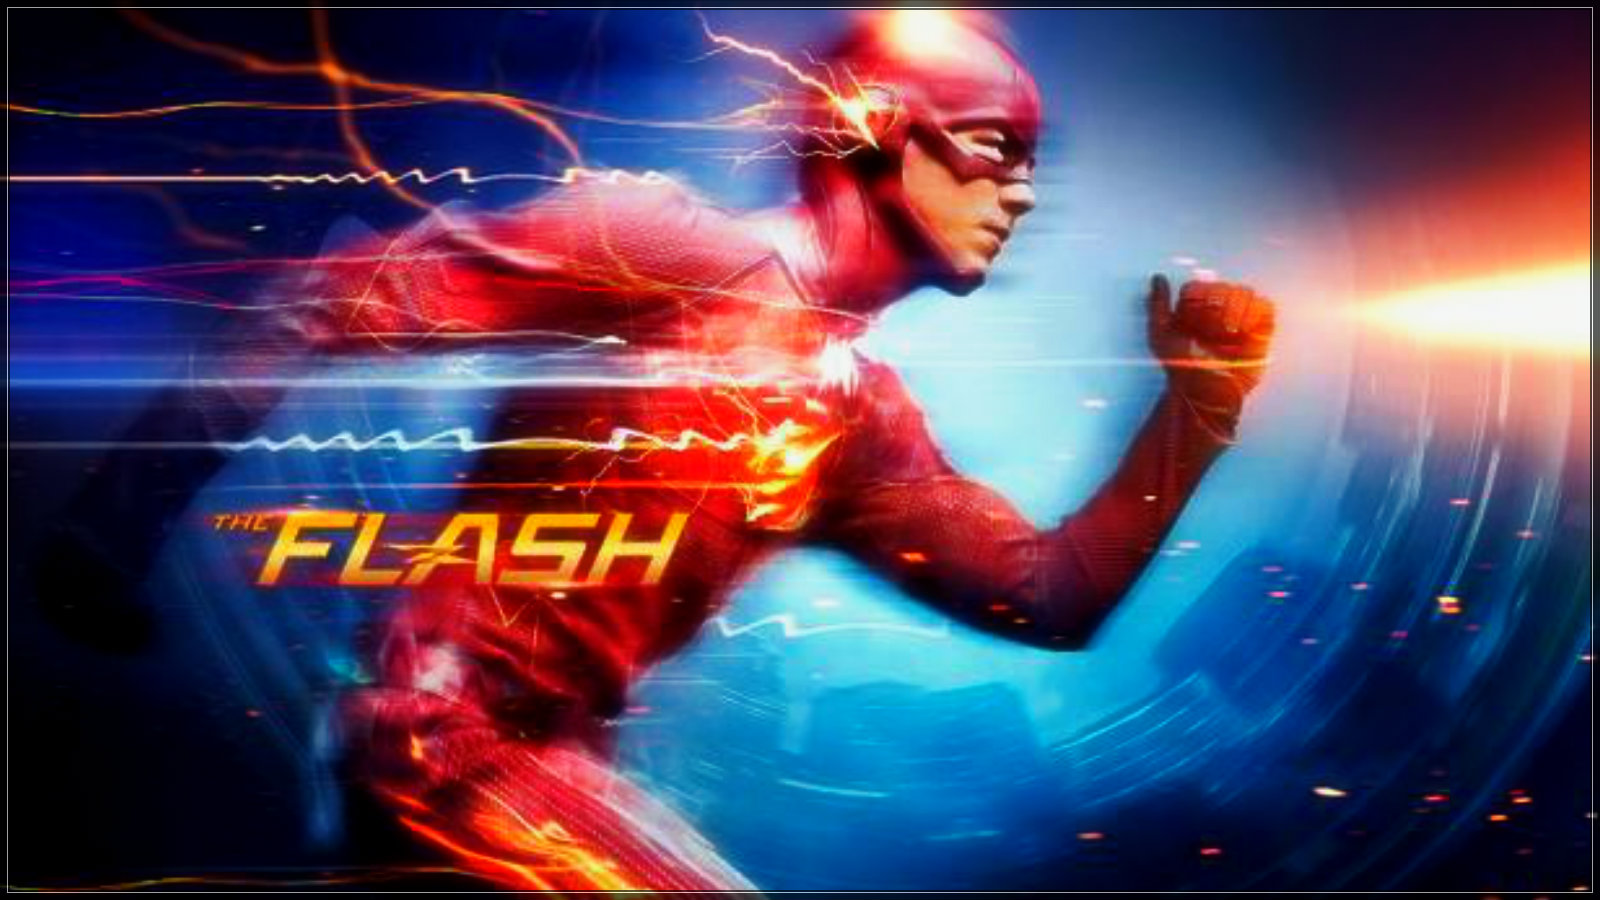 The Flash - The Flash (CW) Wallpaper (37656140) - walmage.com ...